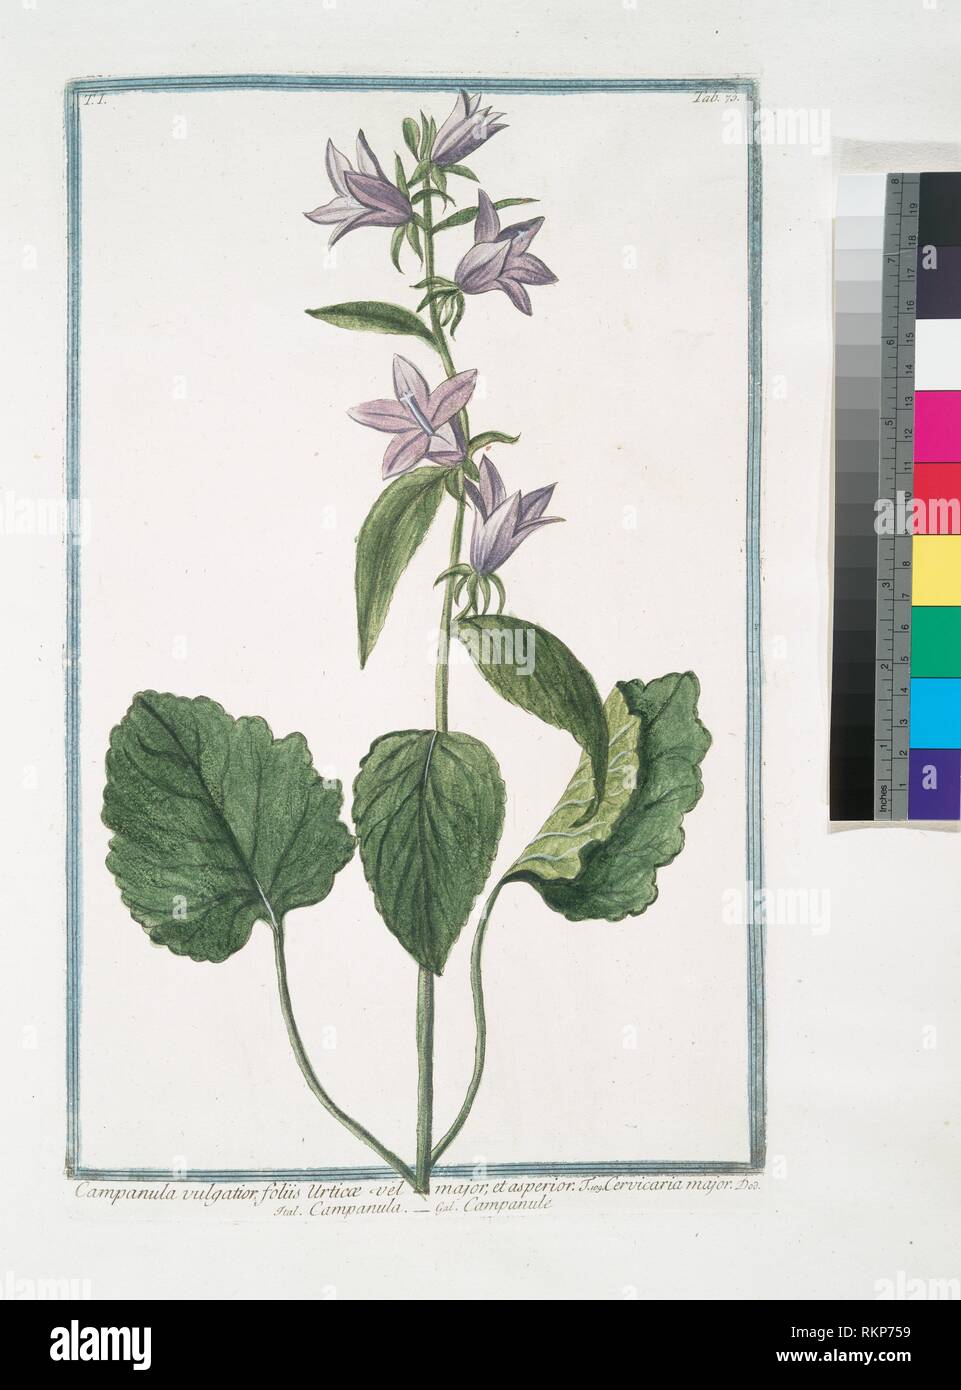 Campanula vulgatior foliis Urticae vel major, et asperior = Cervicaria grandi = Campanula = Campanule. [Bell fiore]. Bonelli, Giorgio (b. 1724) Foto Stock